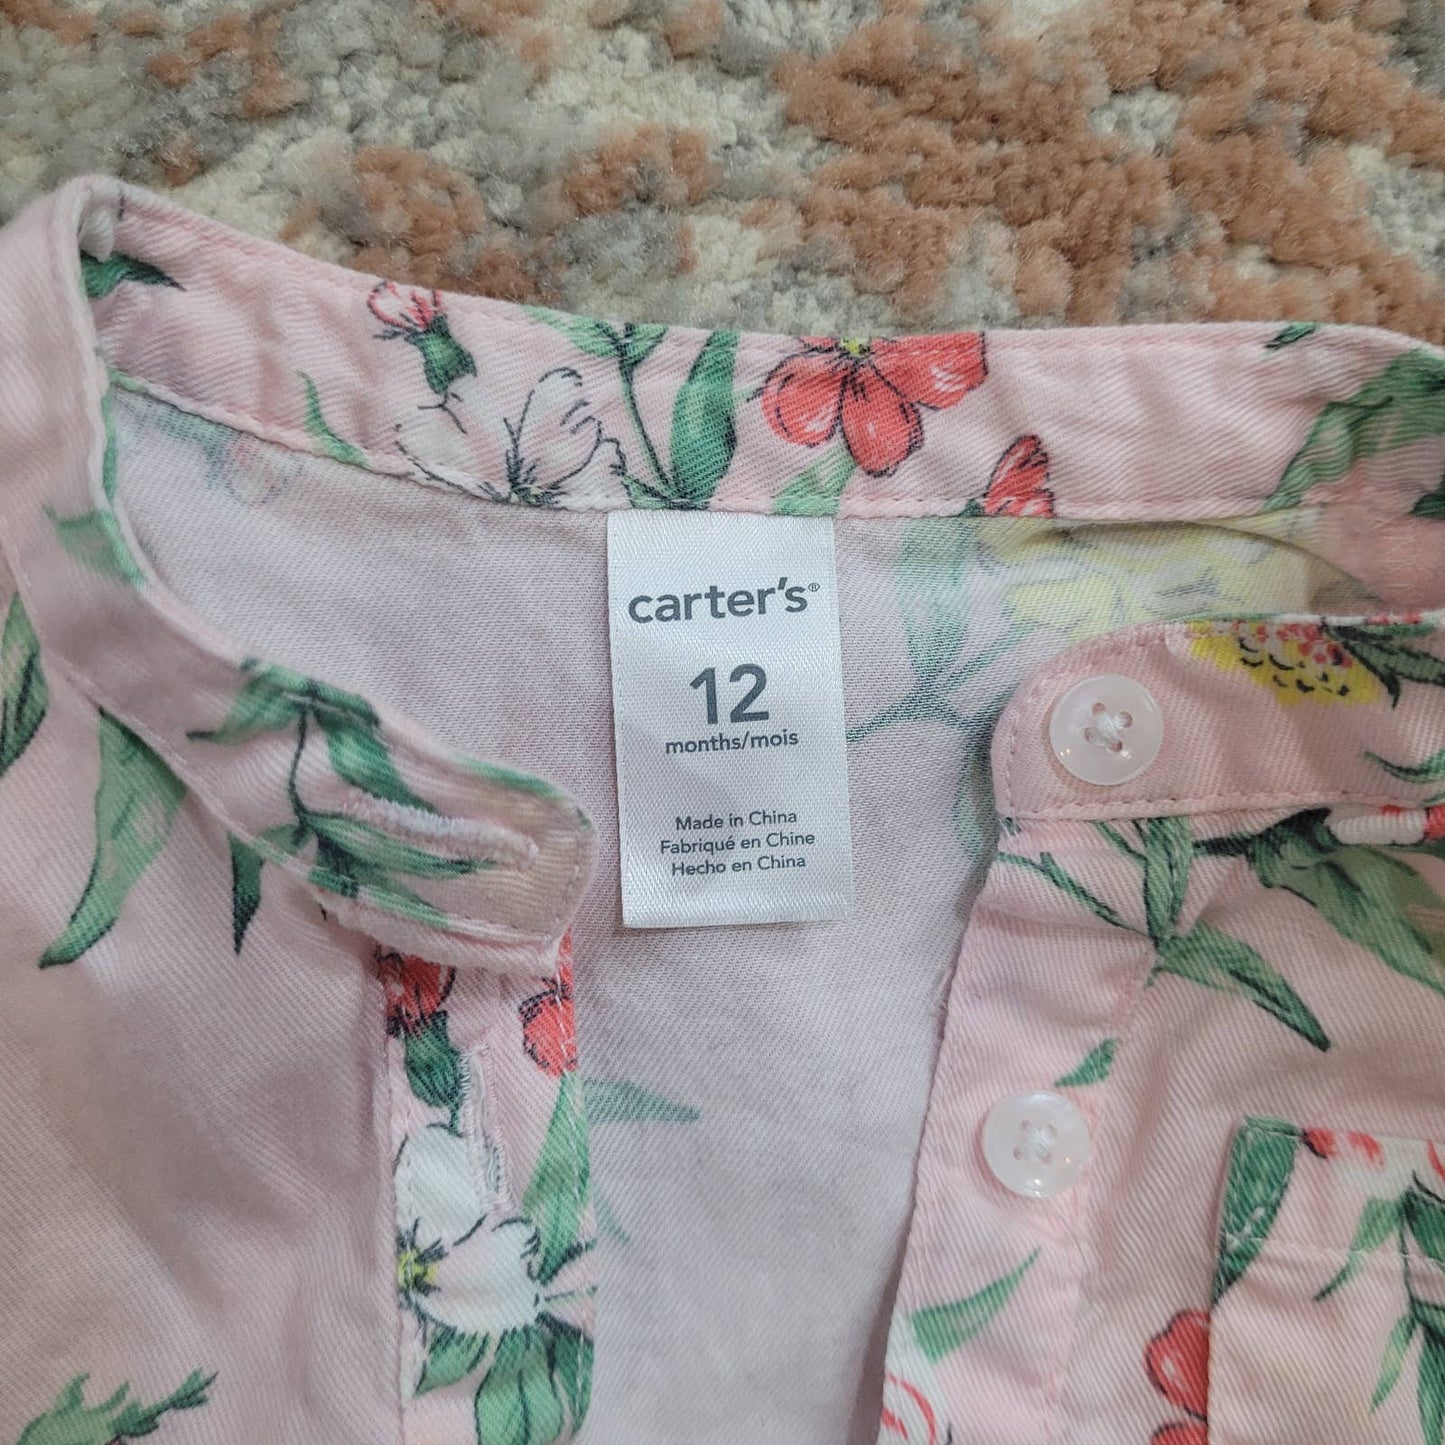 Carter's Pink Floral Dress - Size 12M